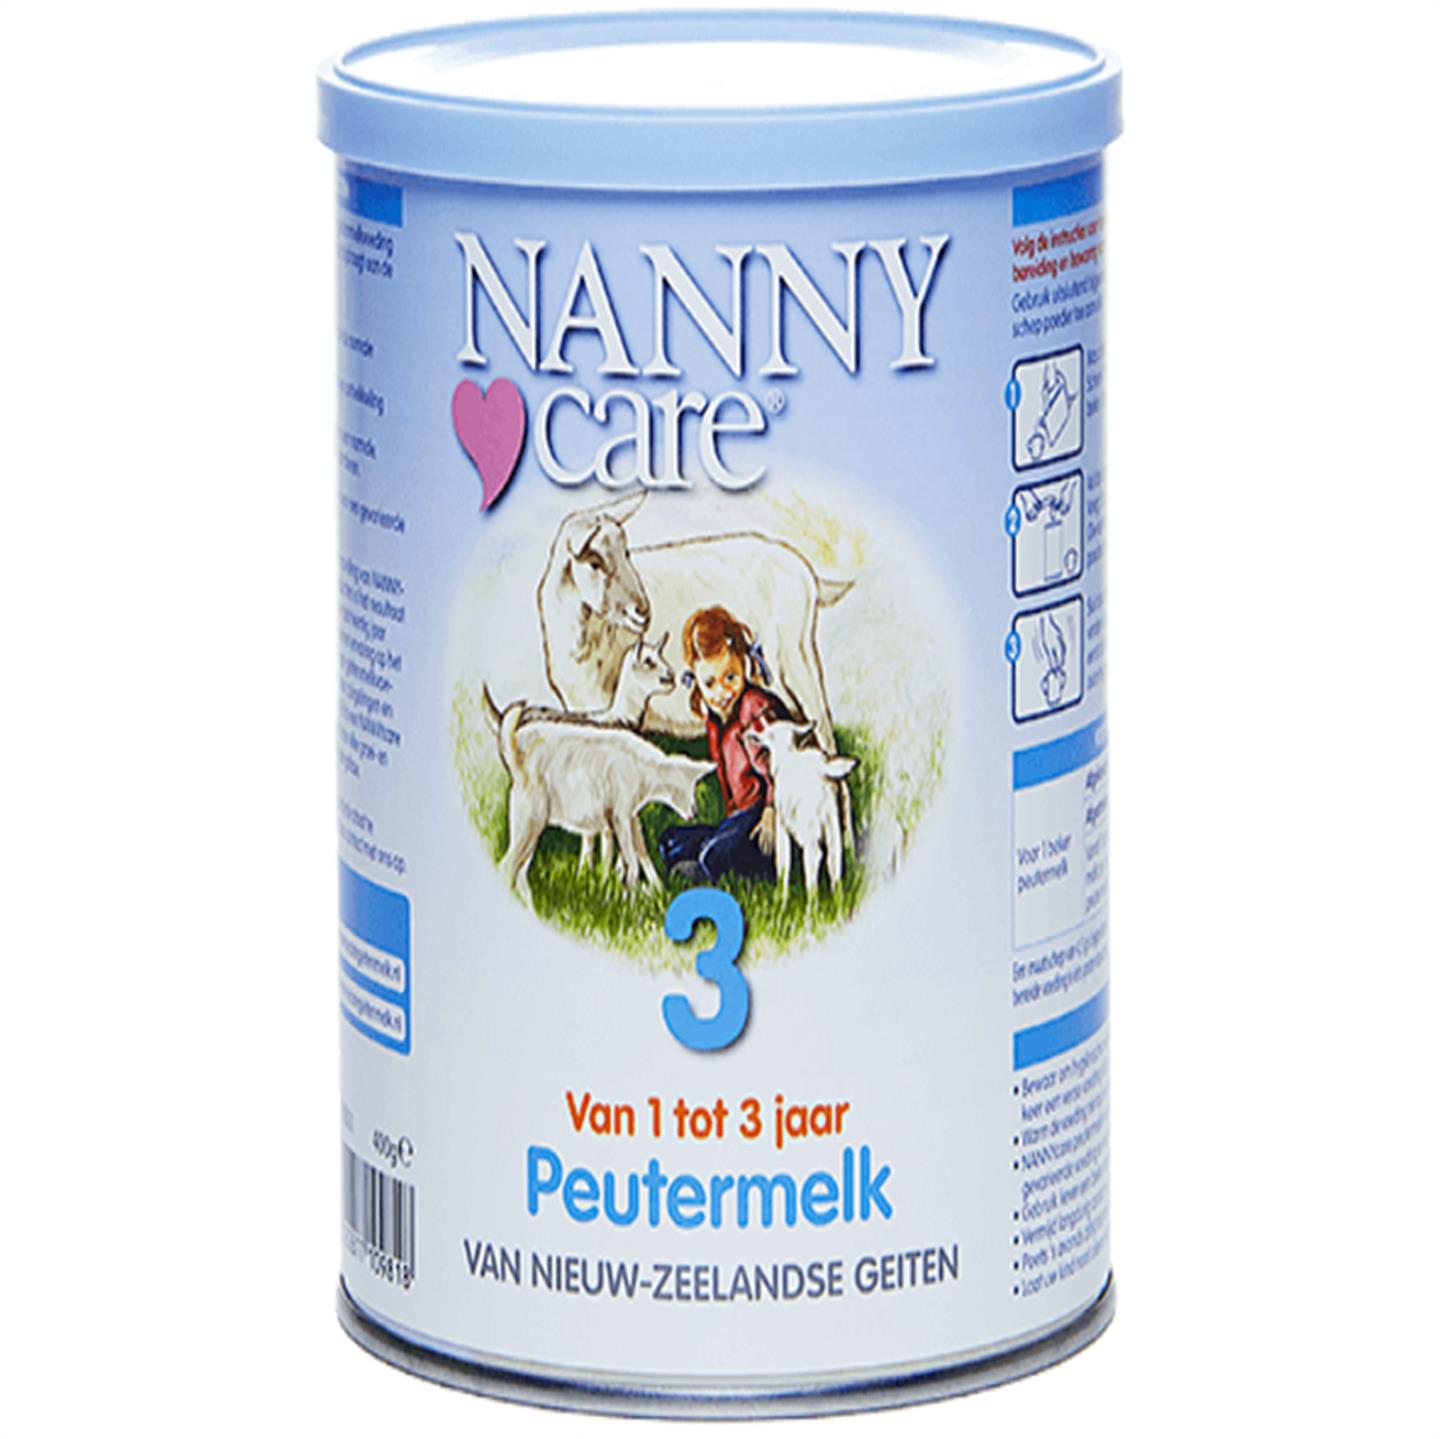 Nanny care 3 Peutermelk